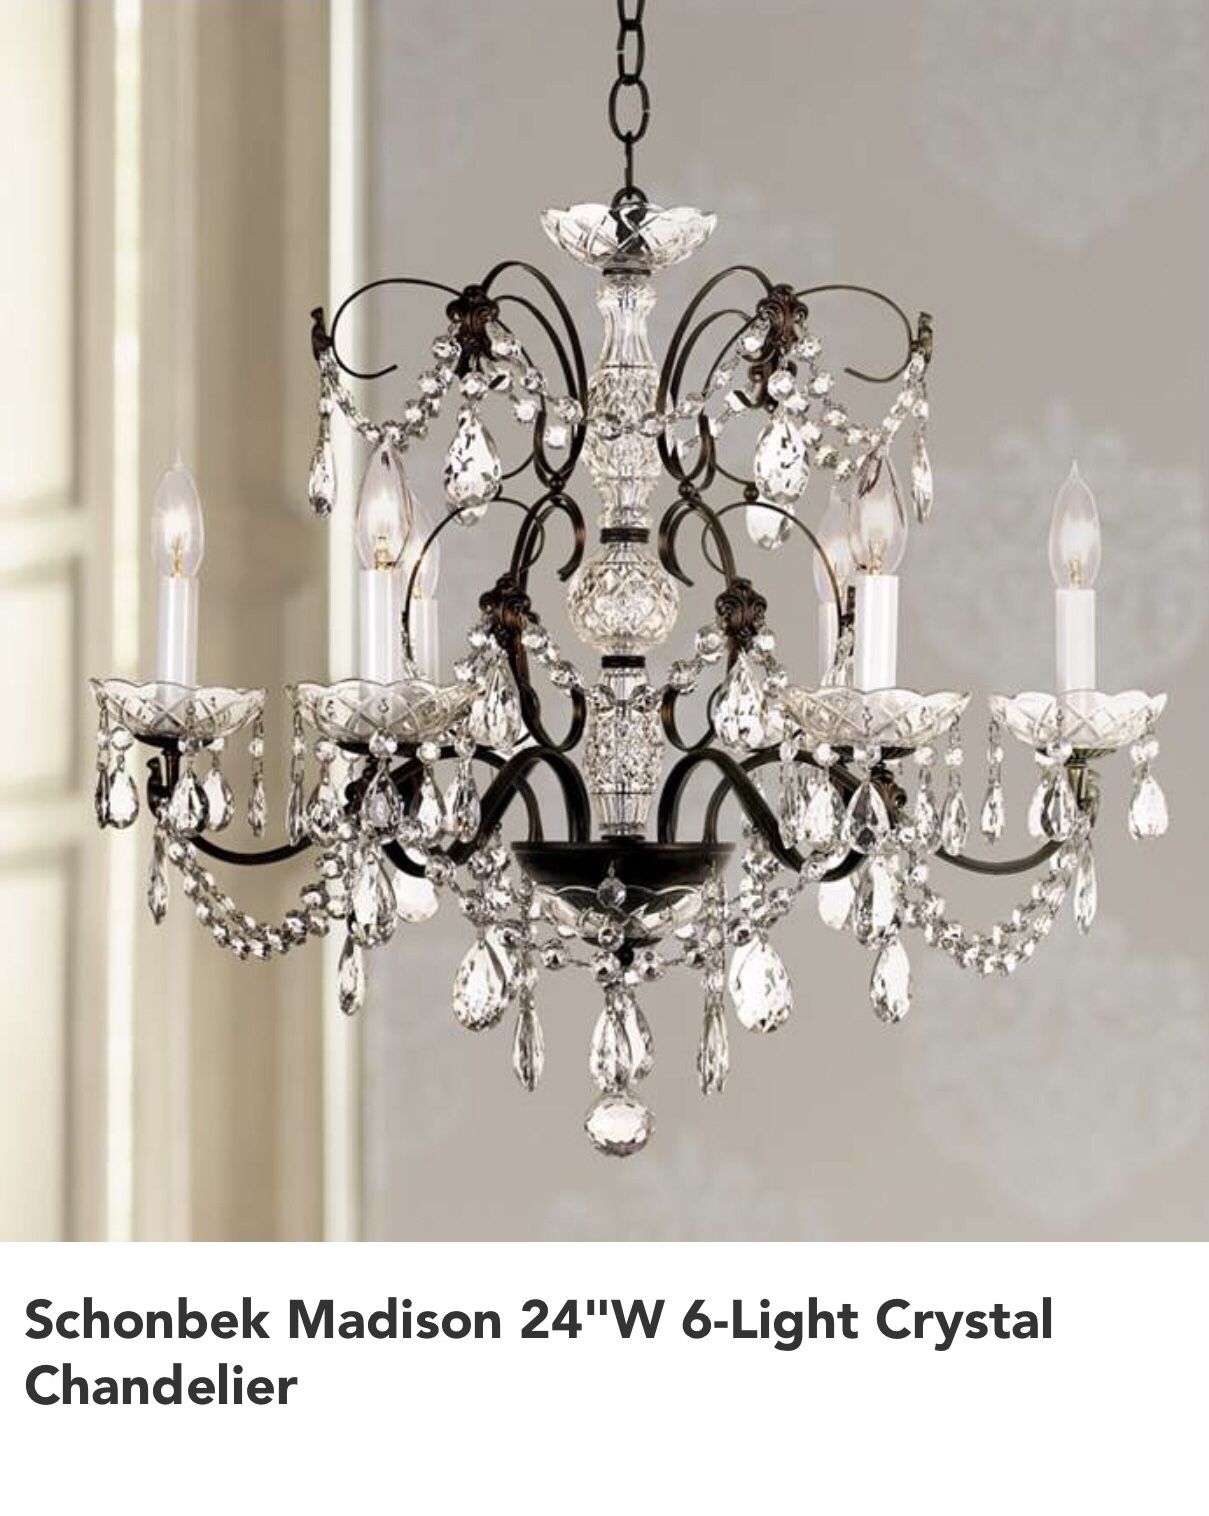 Schonbek Madison 24”W 6-Light Crystal Chandelier